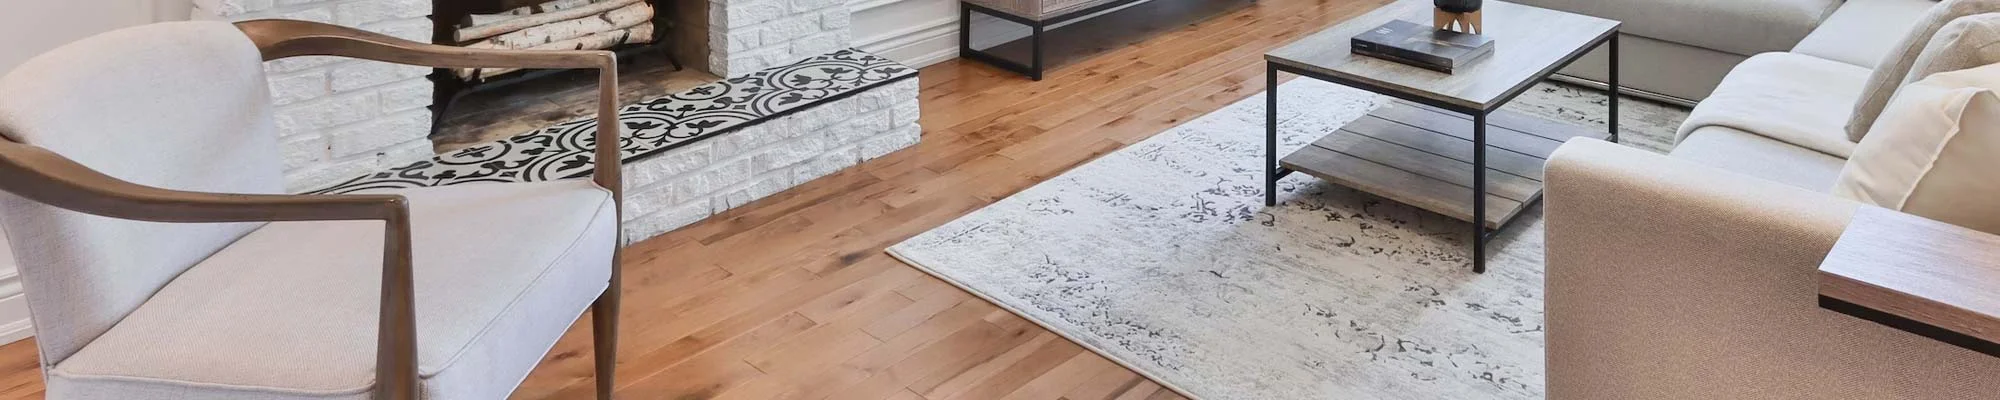 View Carpet Depot’s Flooring Product Catalog